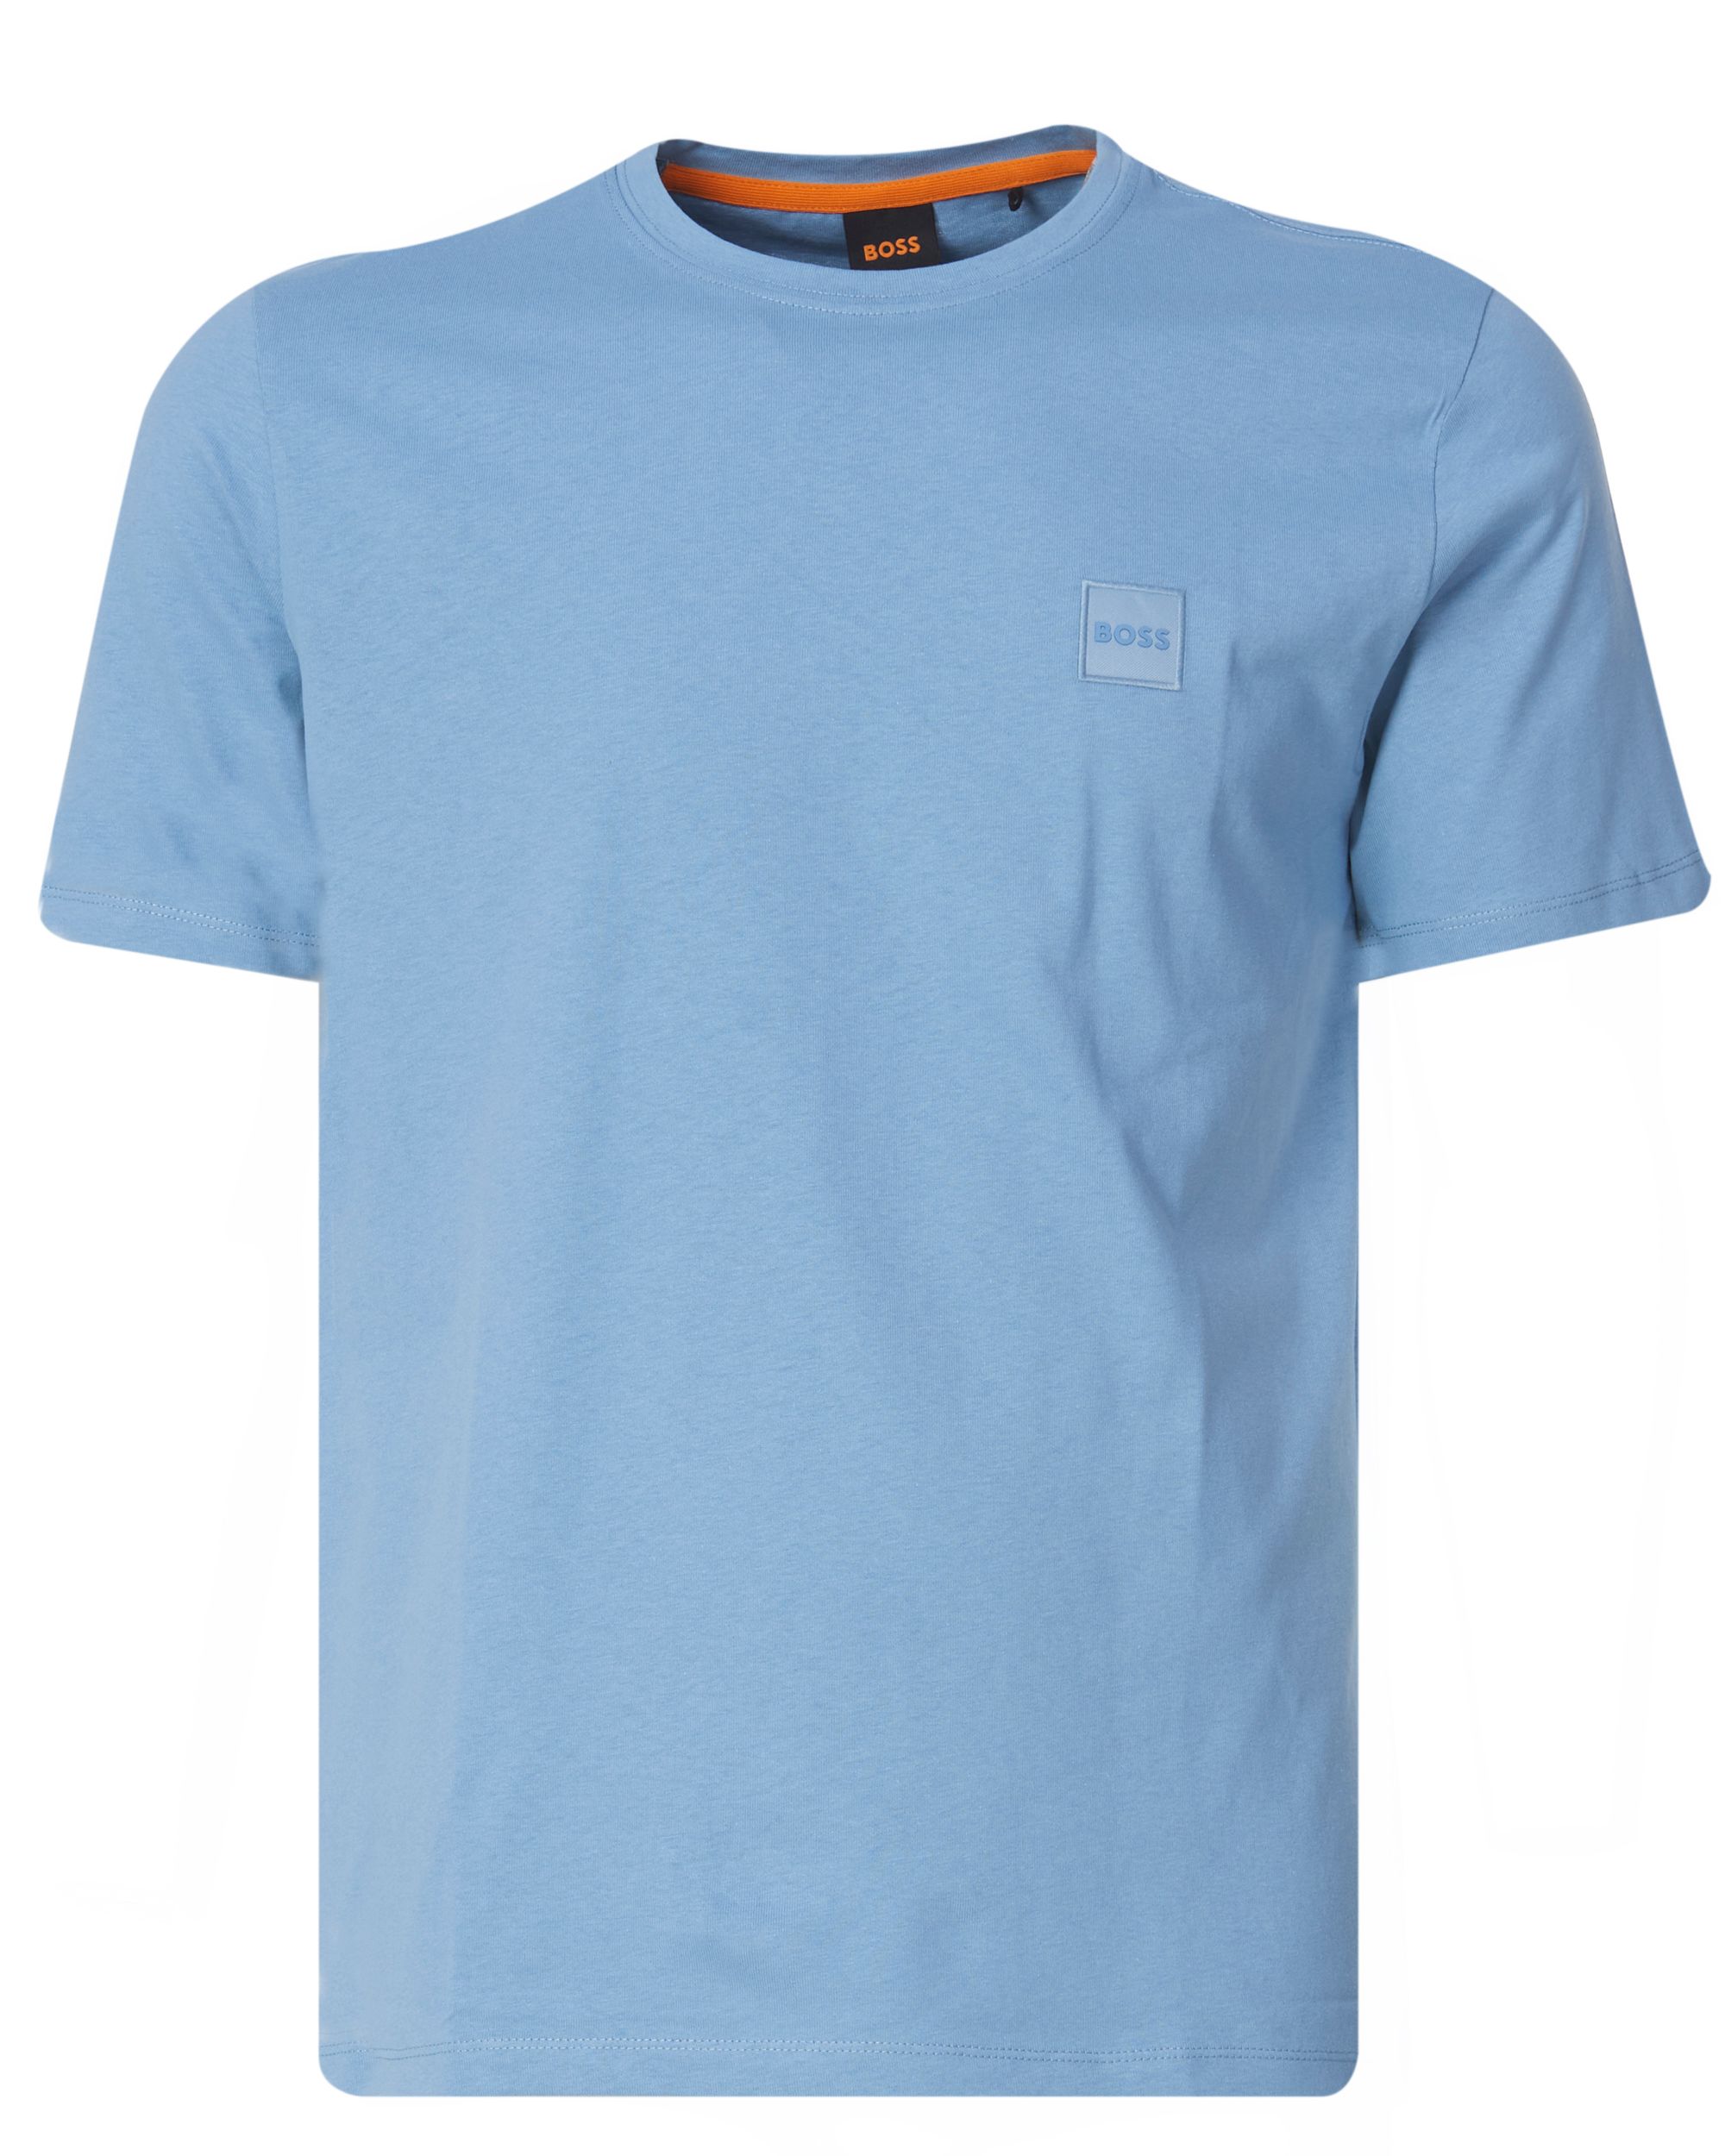 Hugo Boss Casual T-shirt KM Licht blauw 084116-002-L